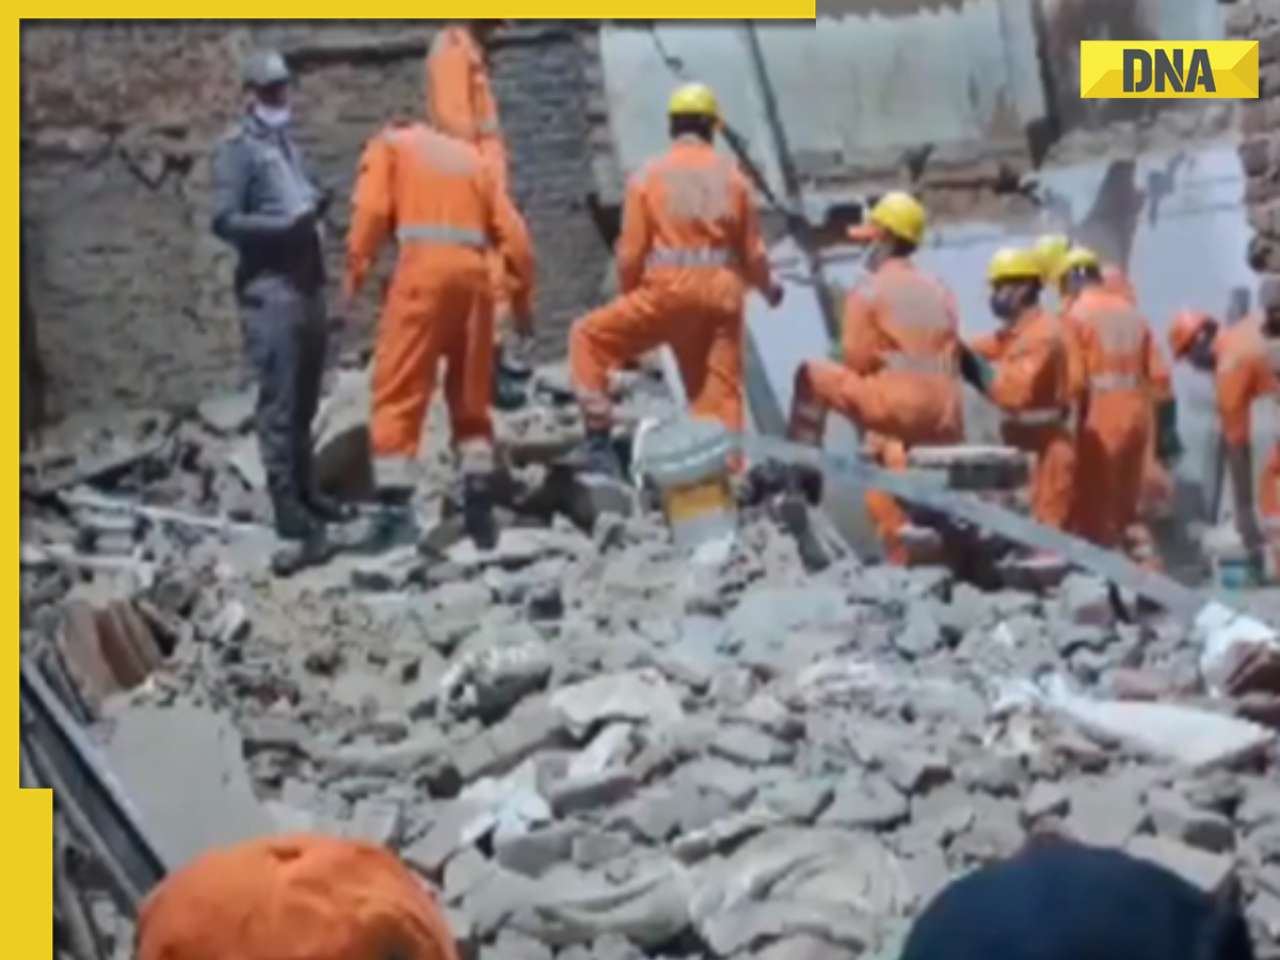 Delhi: 2 killed in building collapses in Kabir Nagar, 1 critical